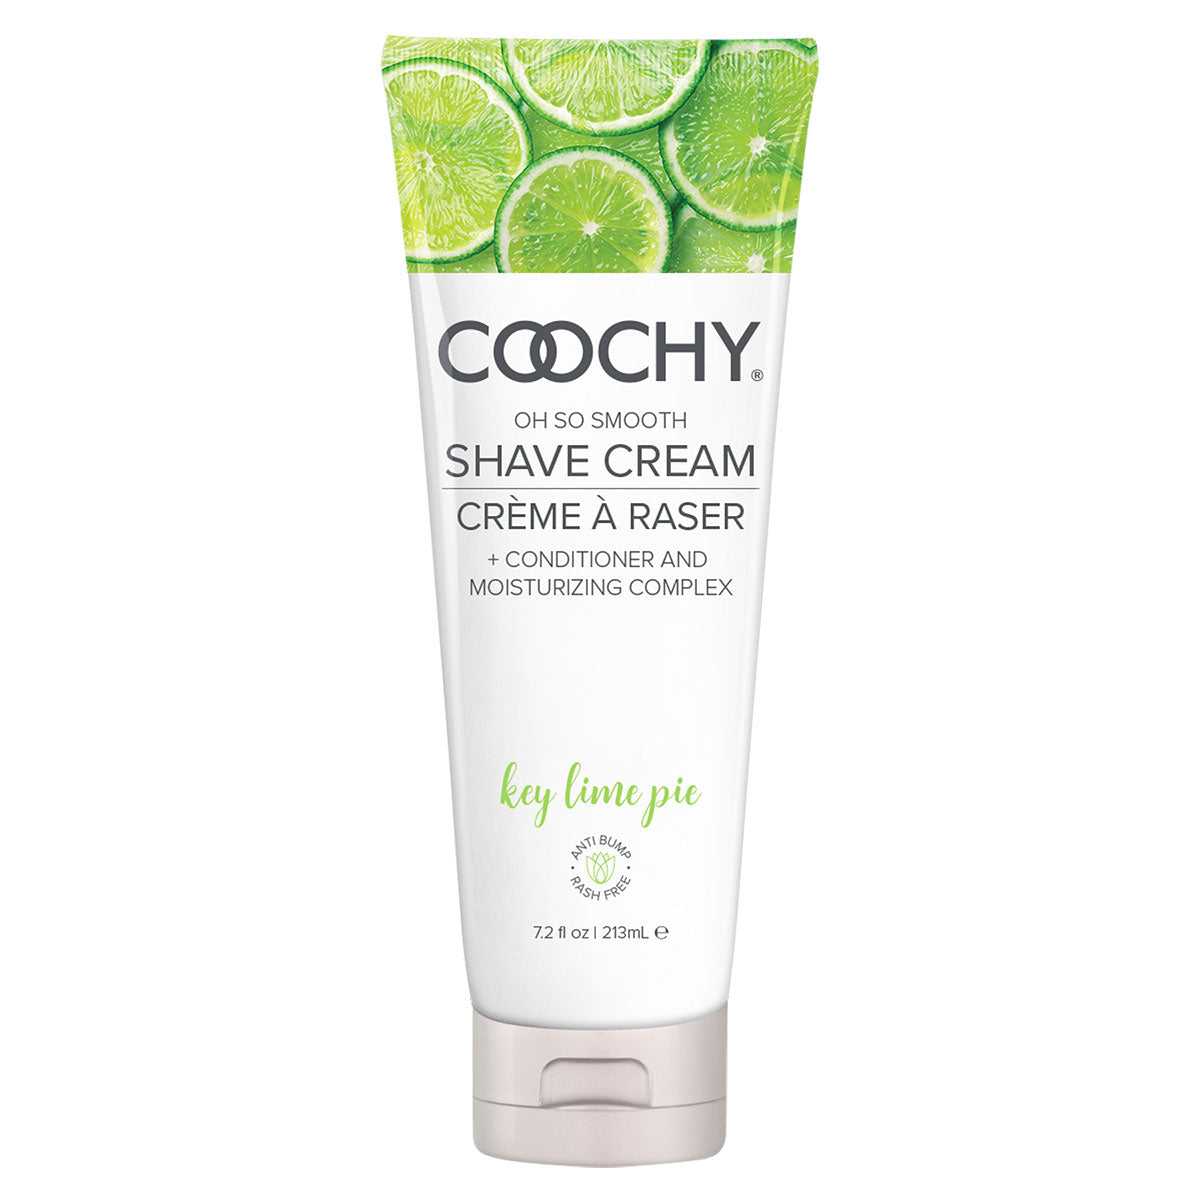 Coochy Shave Cream 7.2oz - Key Lime Pie